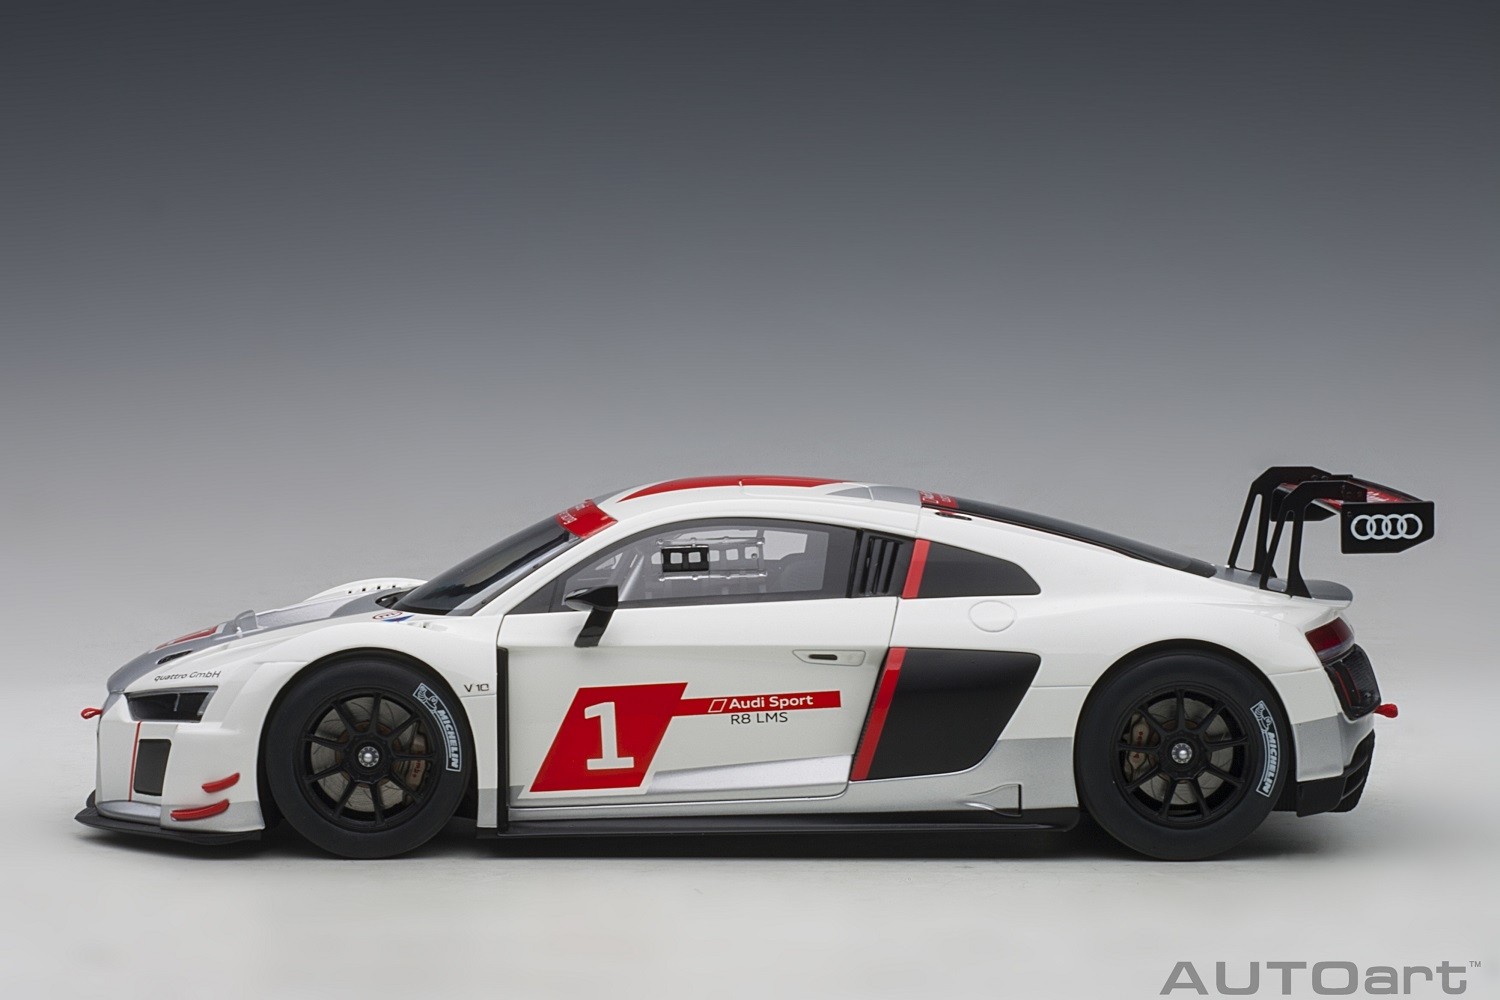 White Audi R8 LMS Geneva Presentation Car 2016 racing #1 AUTOart